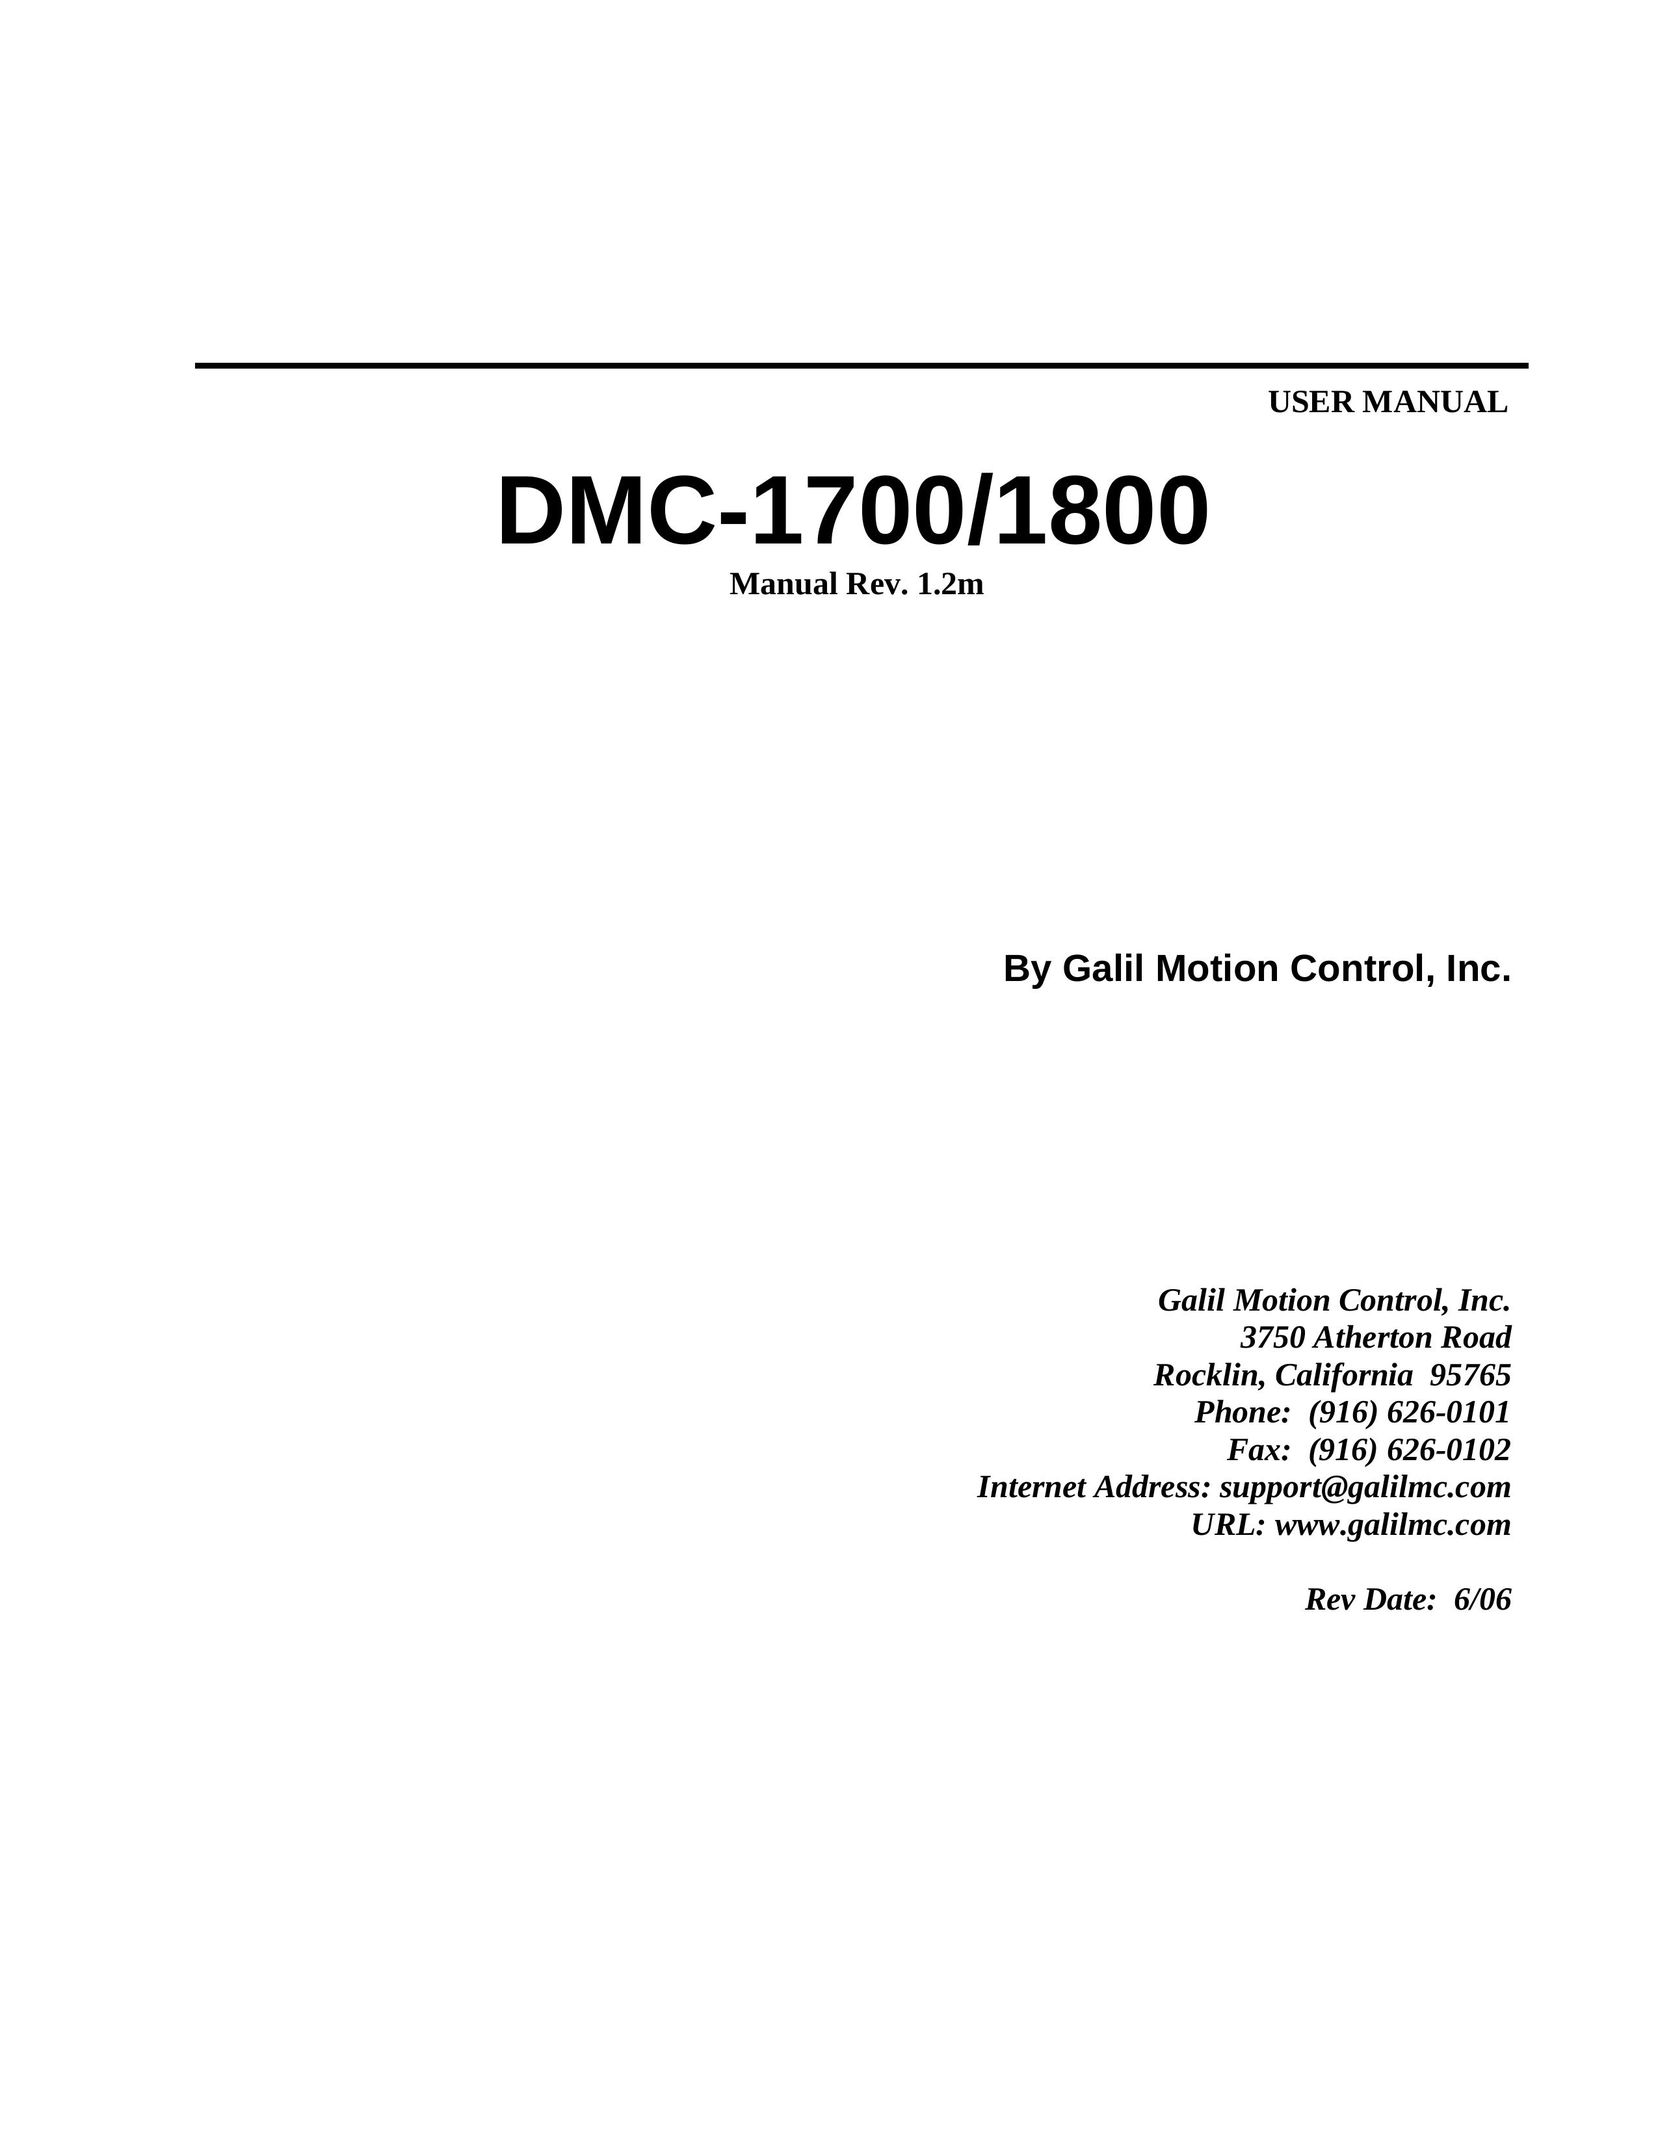 Galil DMC-1700 Home Security System User Manual